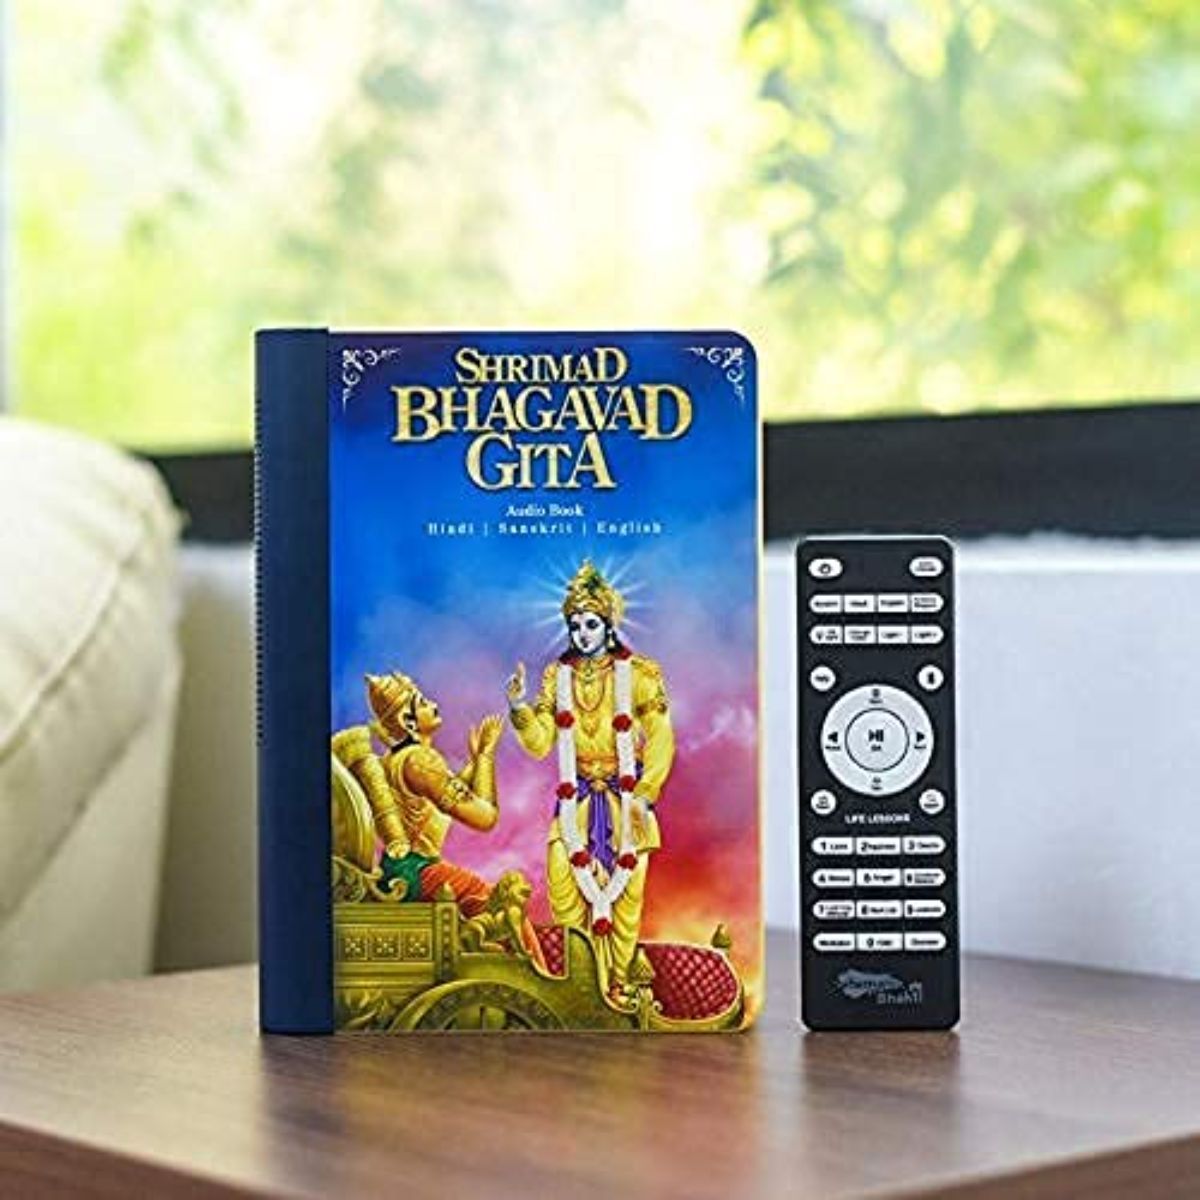 Shemaroo Shrimad Bhagavad Gita in English Hindi & Sanskrit Audio Language